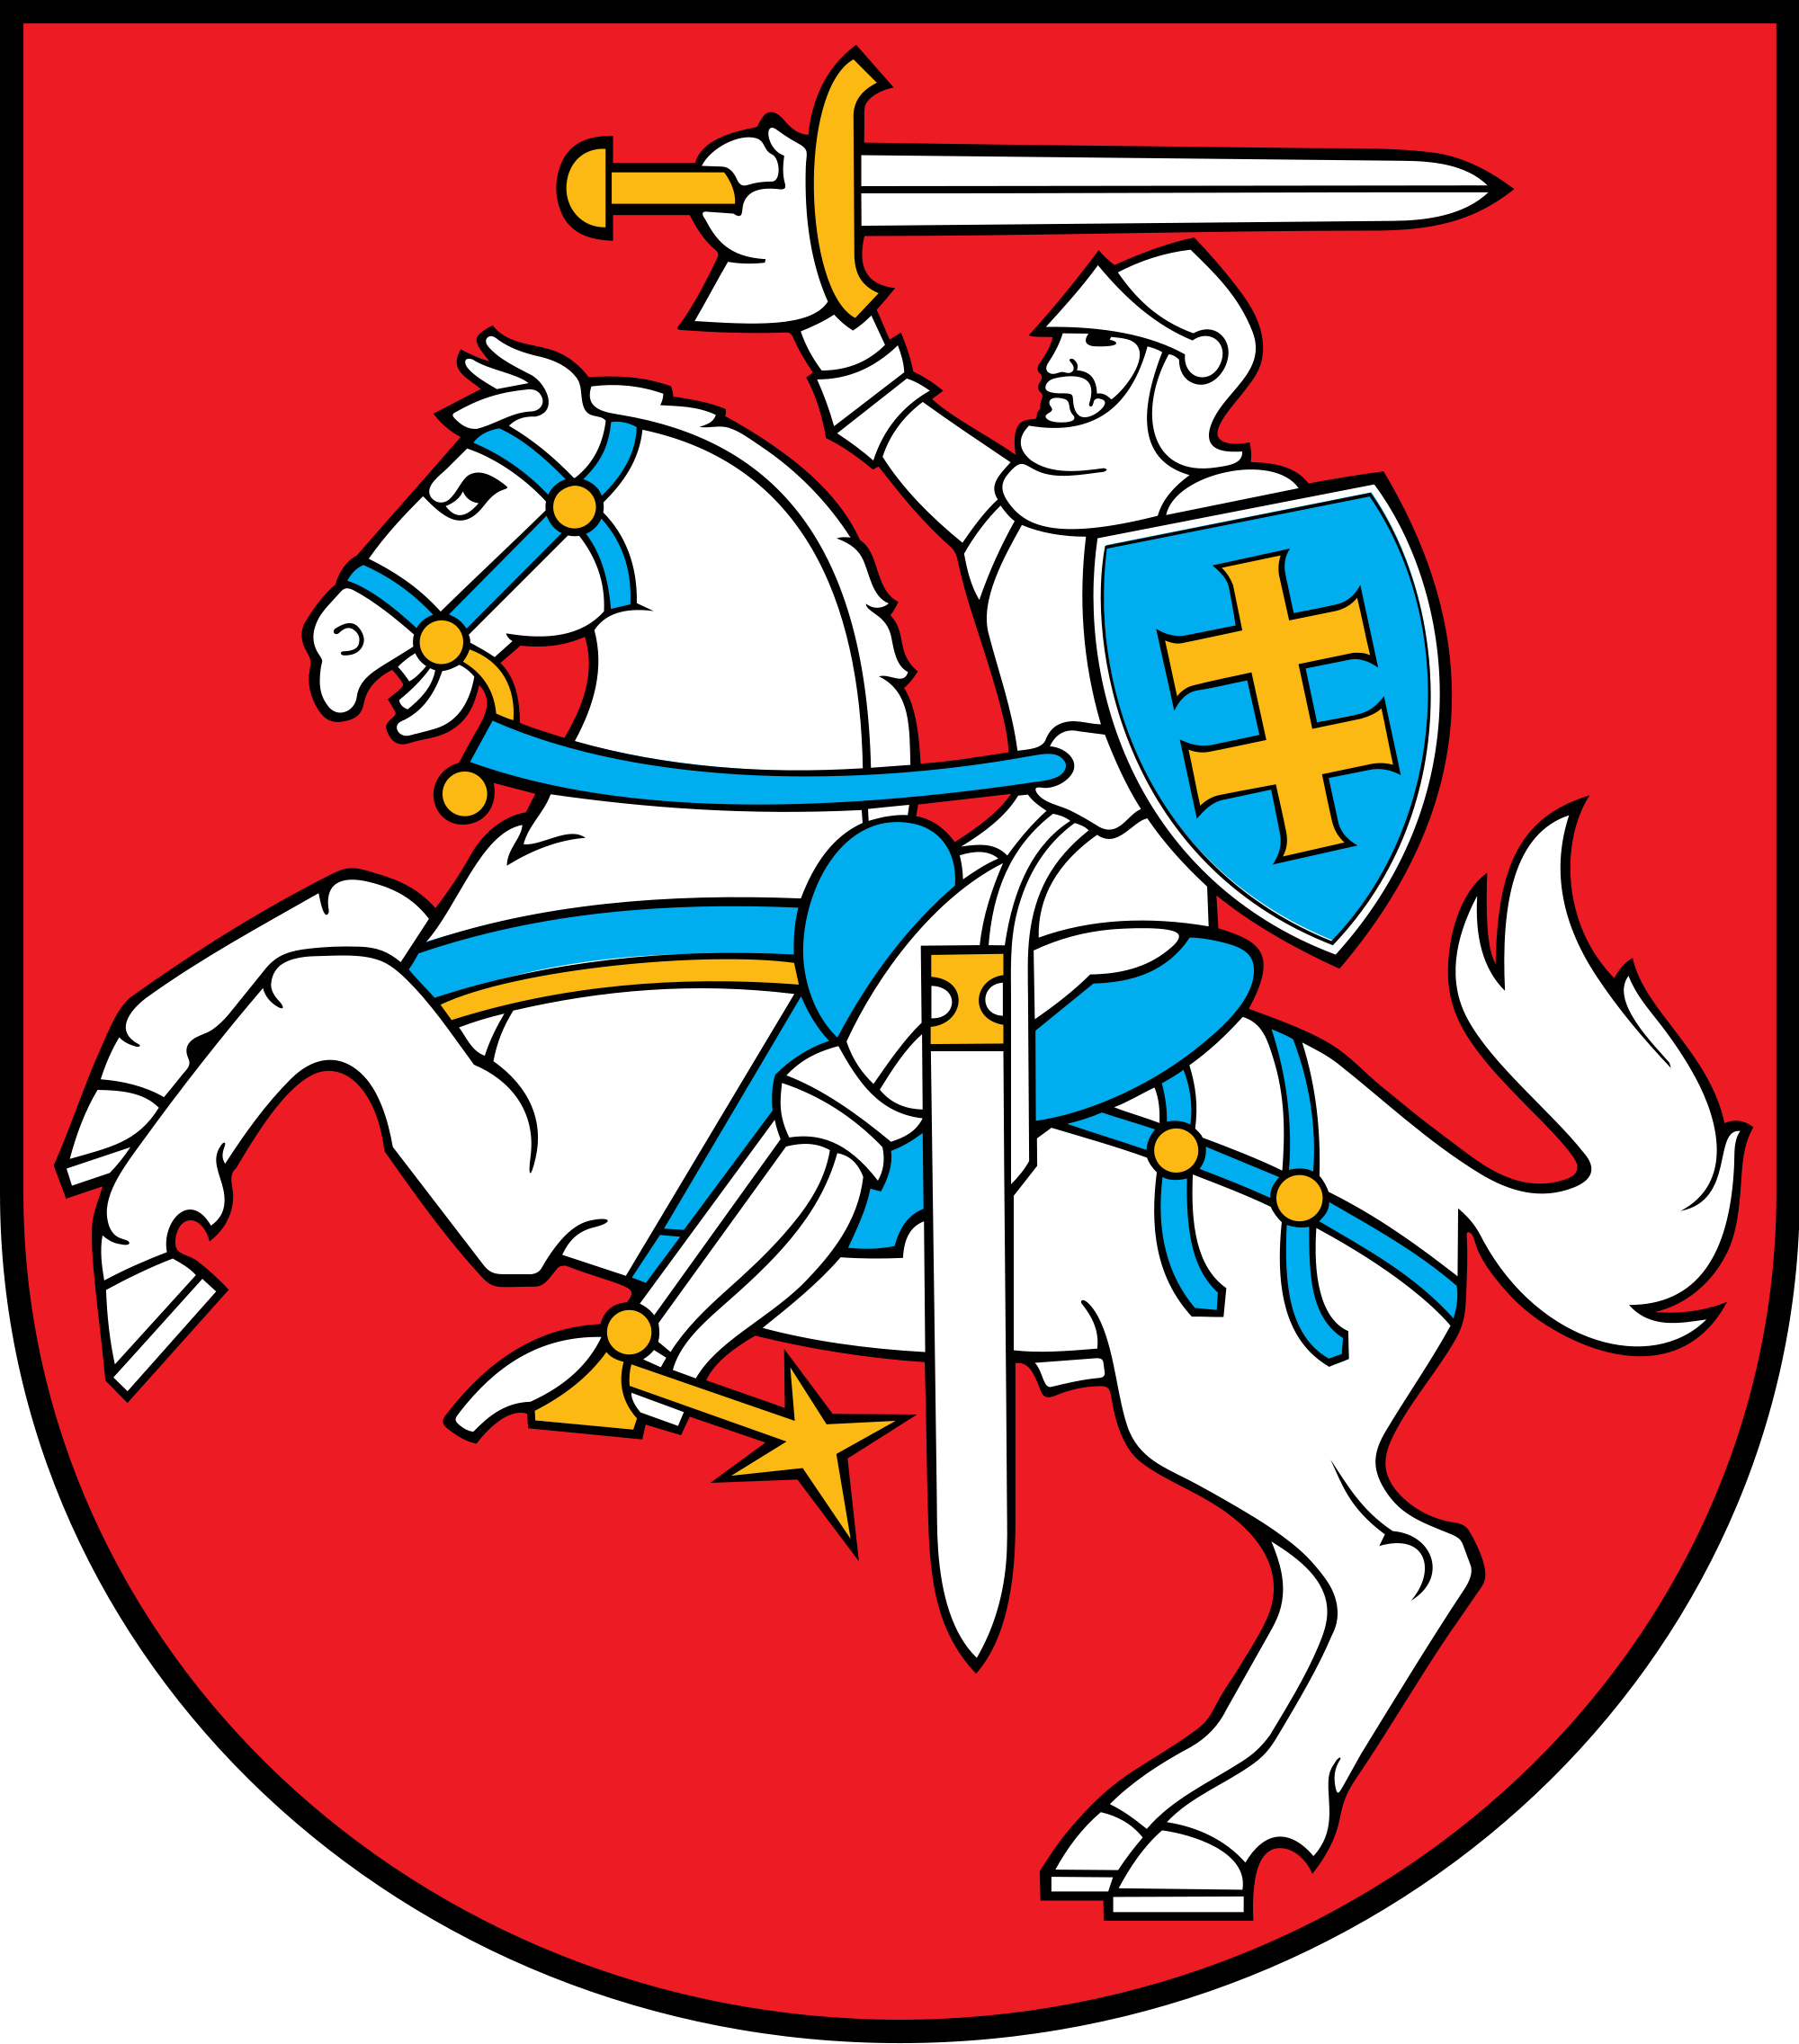 Emblem of Lithuania